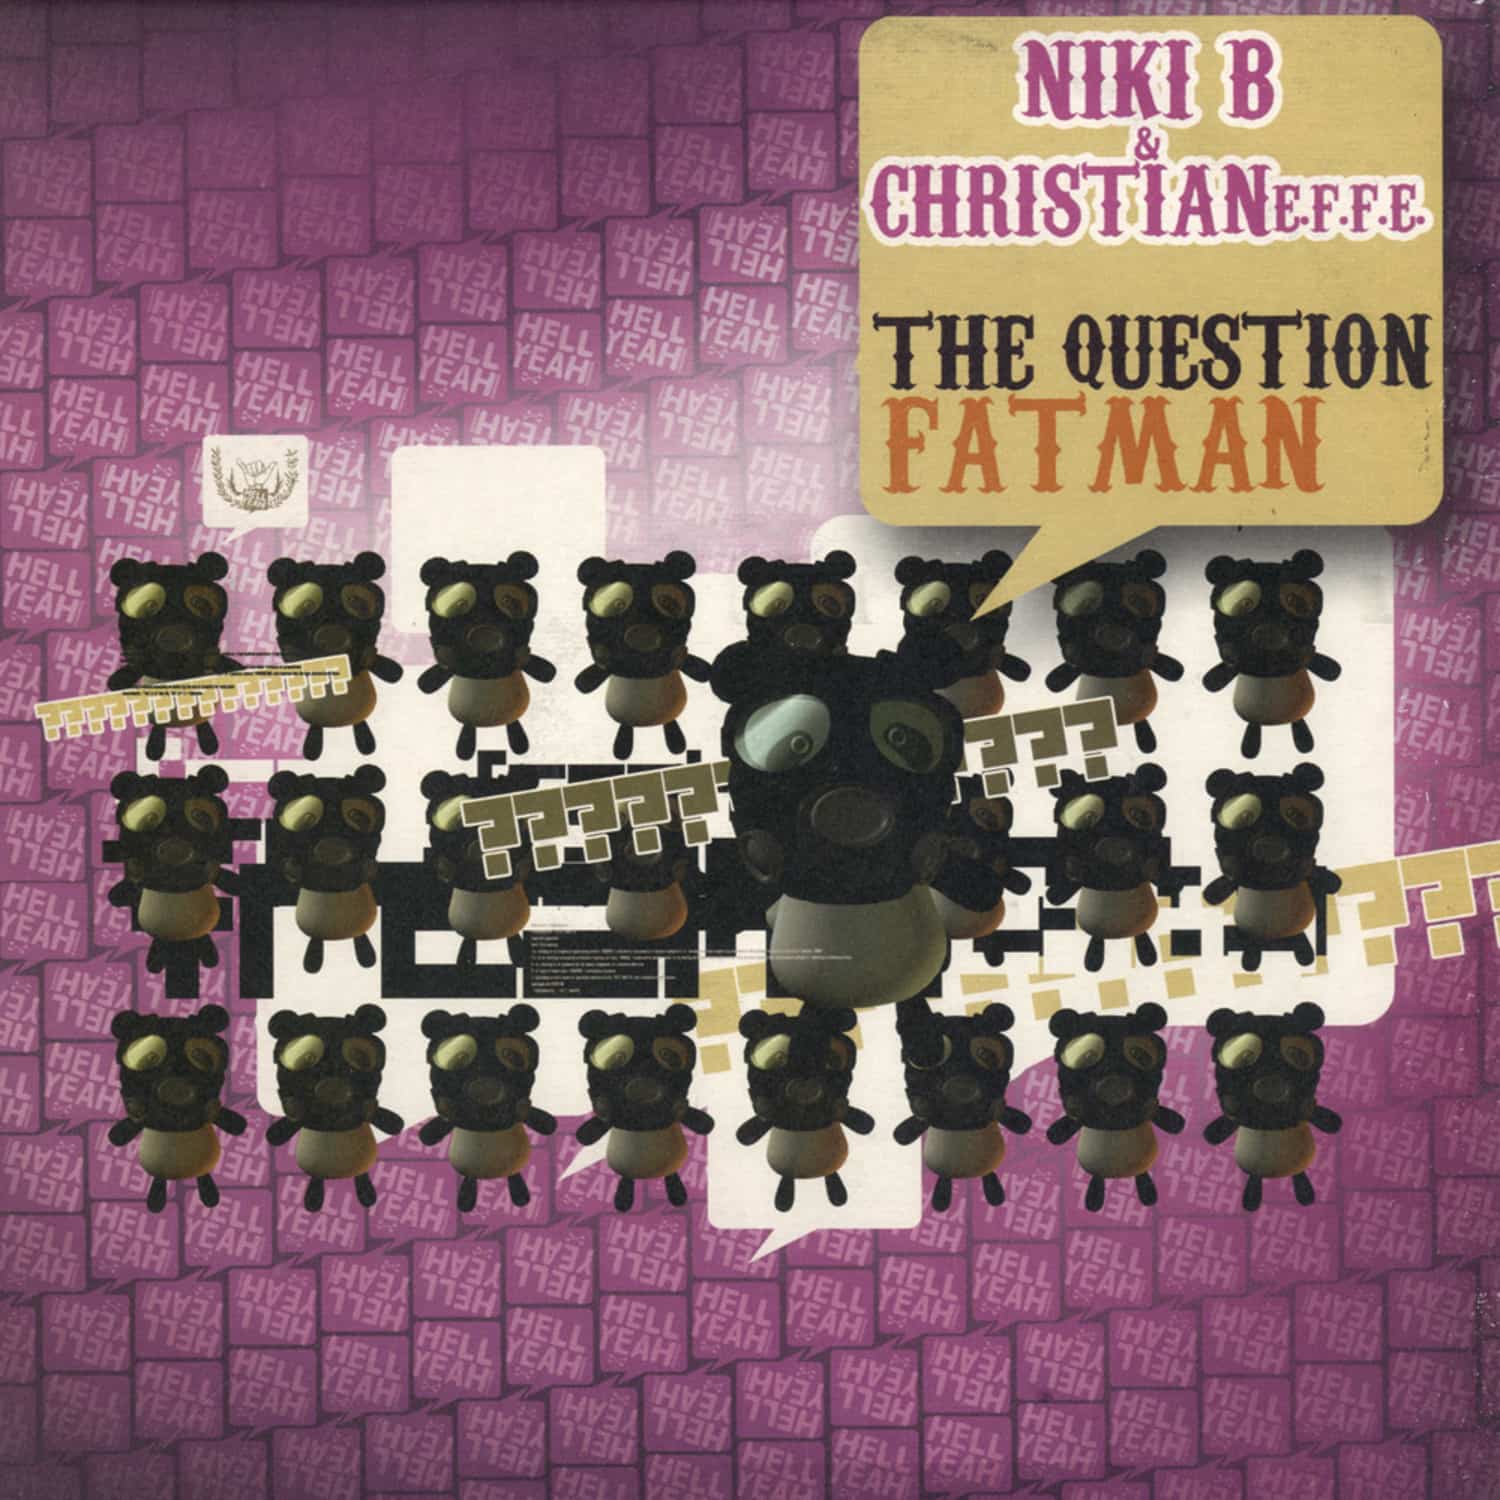 Niki B & Christian E.F.F.E. - THE QUESTION / FATMAN